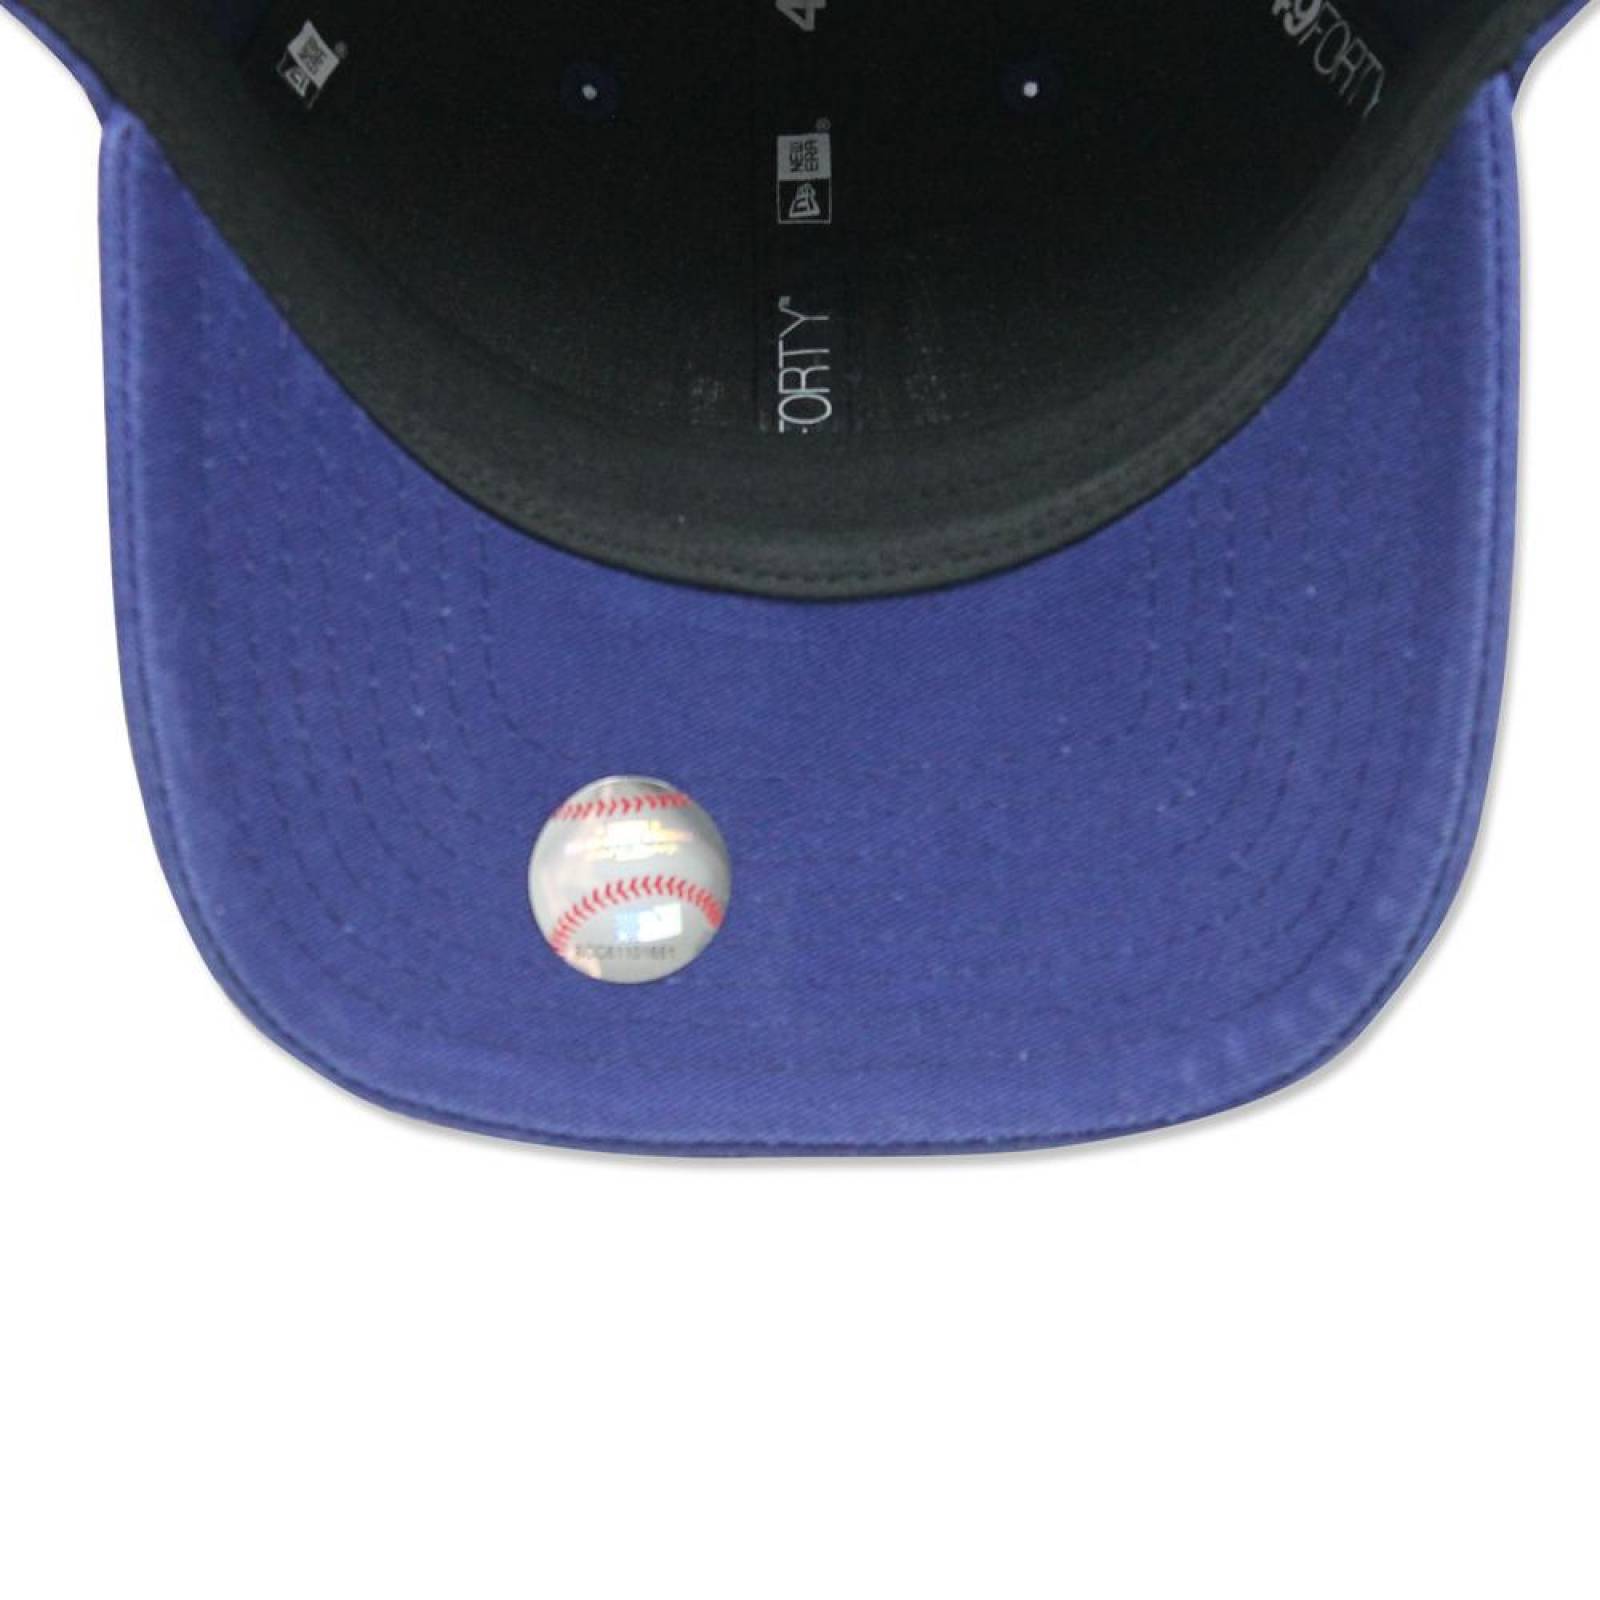 Gorra New Era 4940 MLB Dodgers Core Fit Azul 